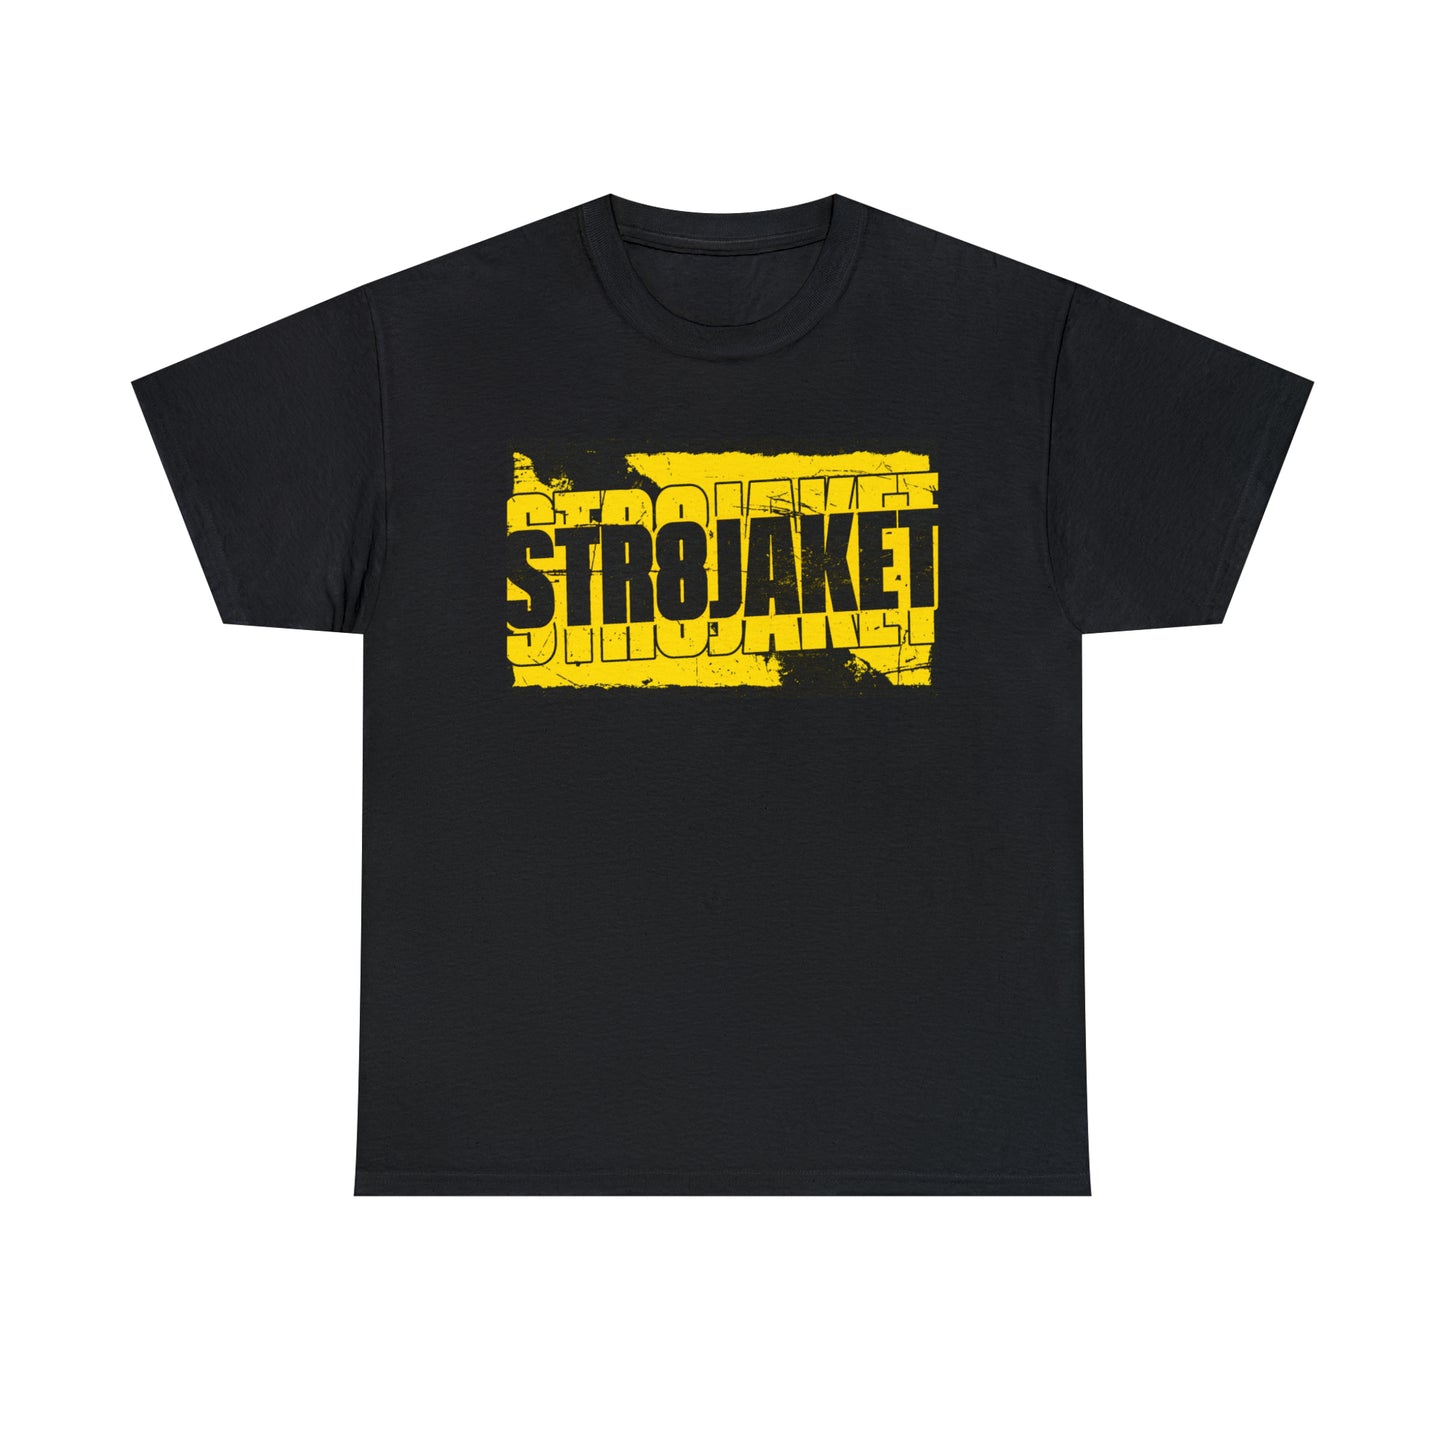 Str8jaket "Grunge" T-Shirt